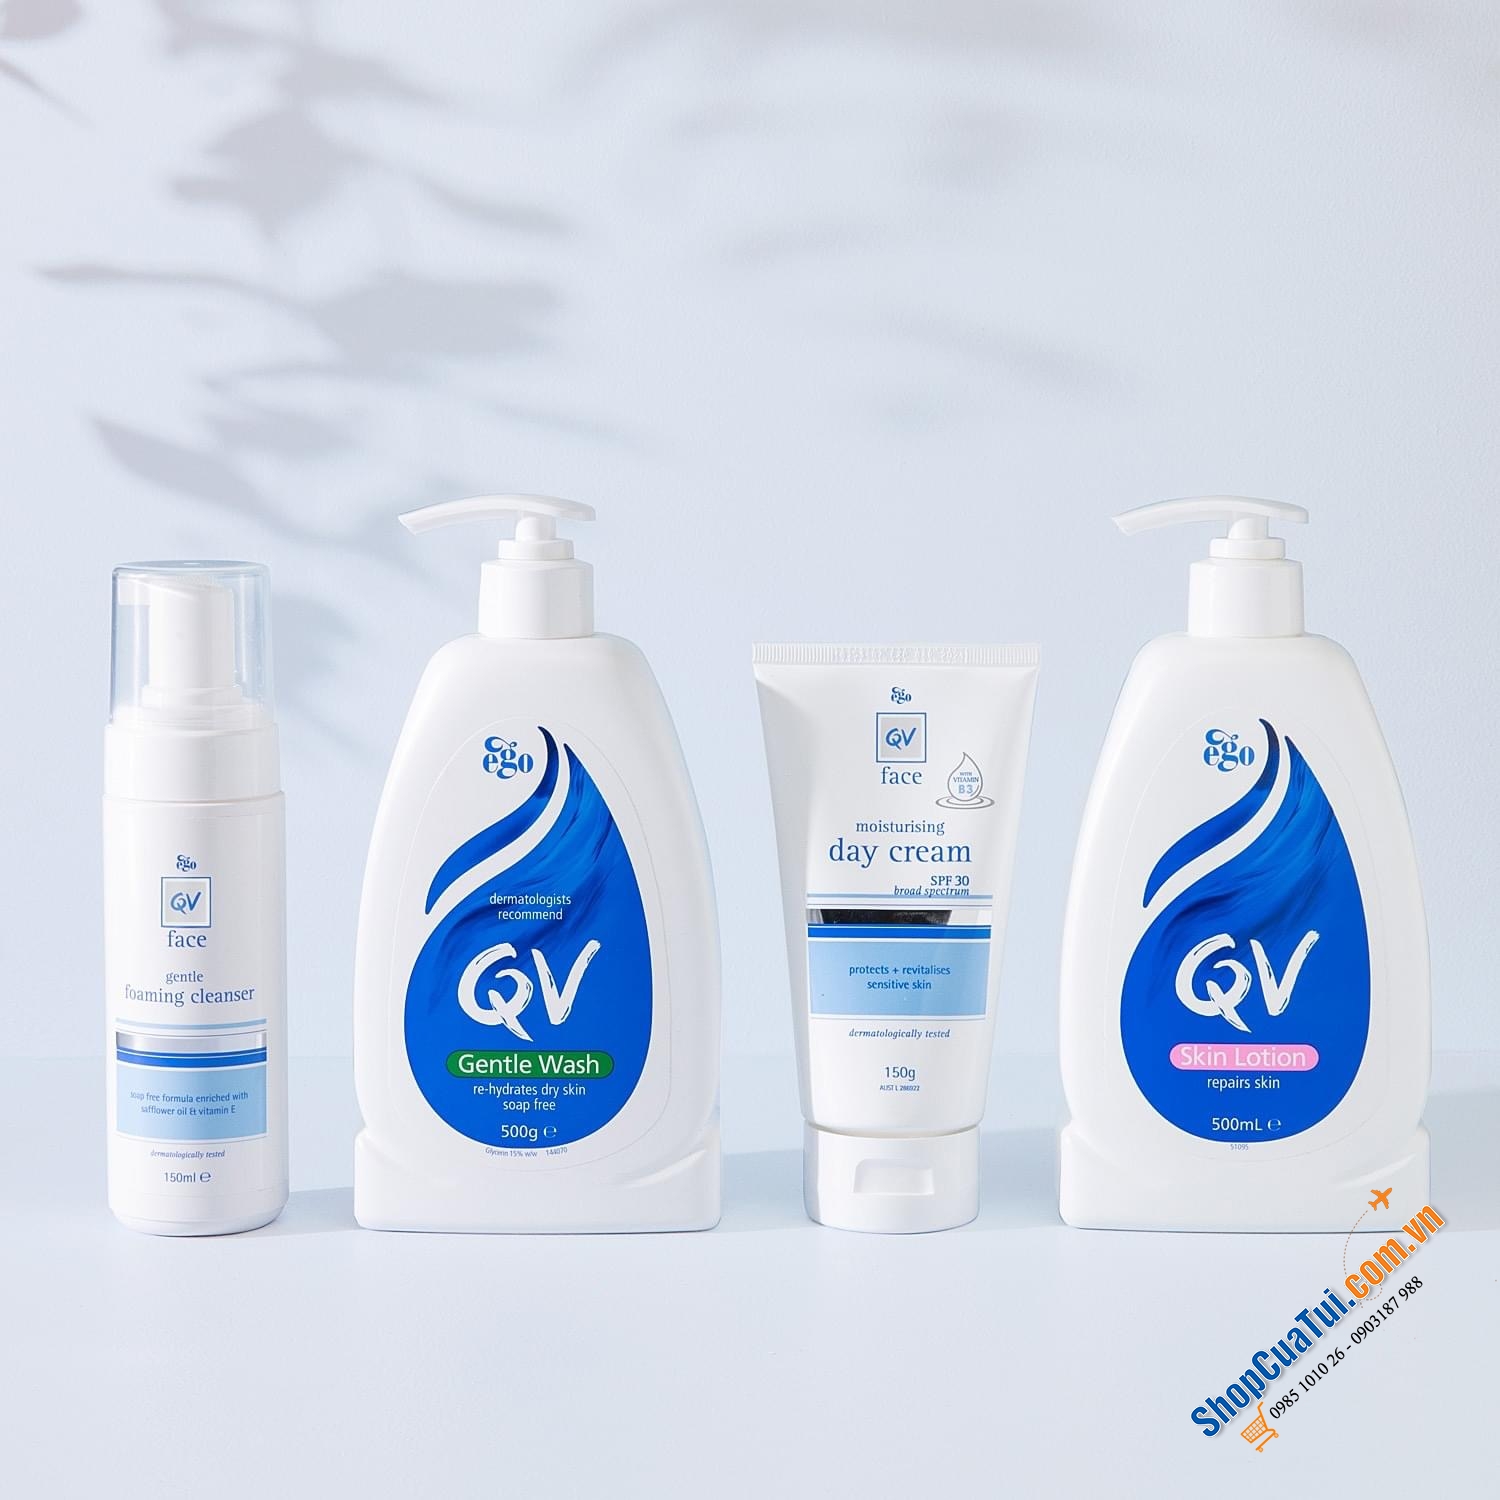 Sữa rửa mặt QV Face Gentle Foaming Cleanser 150Ml - dạng foaming chứa Safflower oil, thích hợp cho da khô, da nhạy cảm, da mỏng dễ bị dị ứng, mẩn đỏ